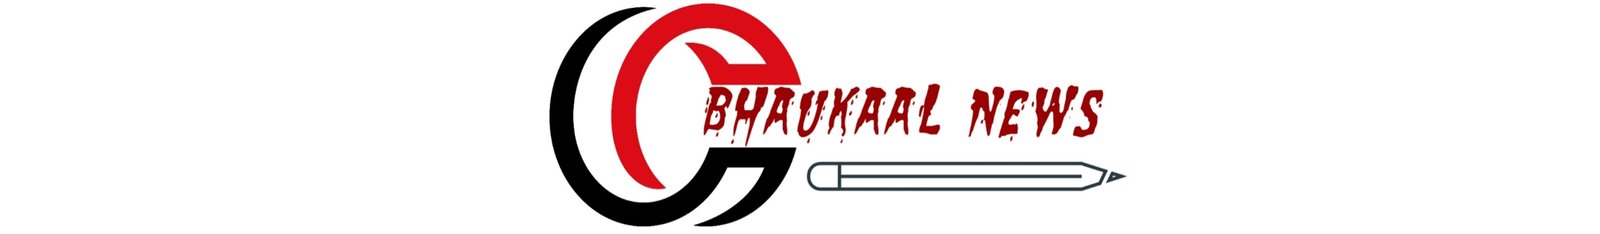 Bhaukaal News